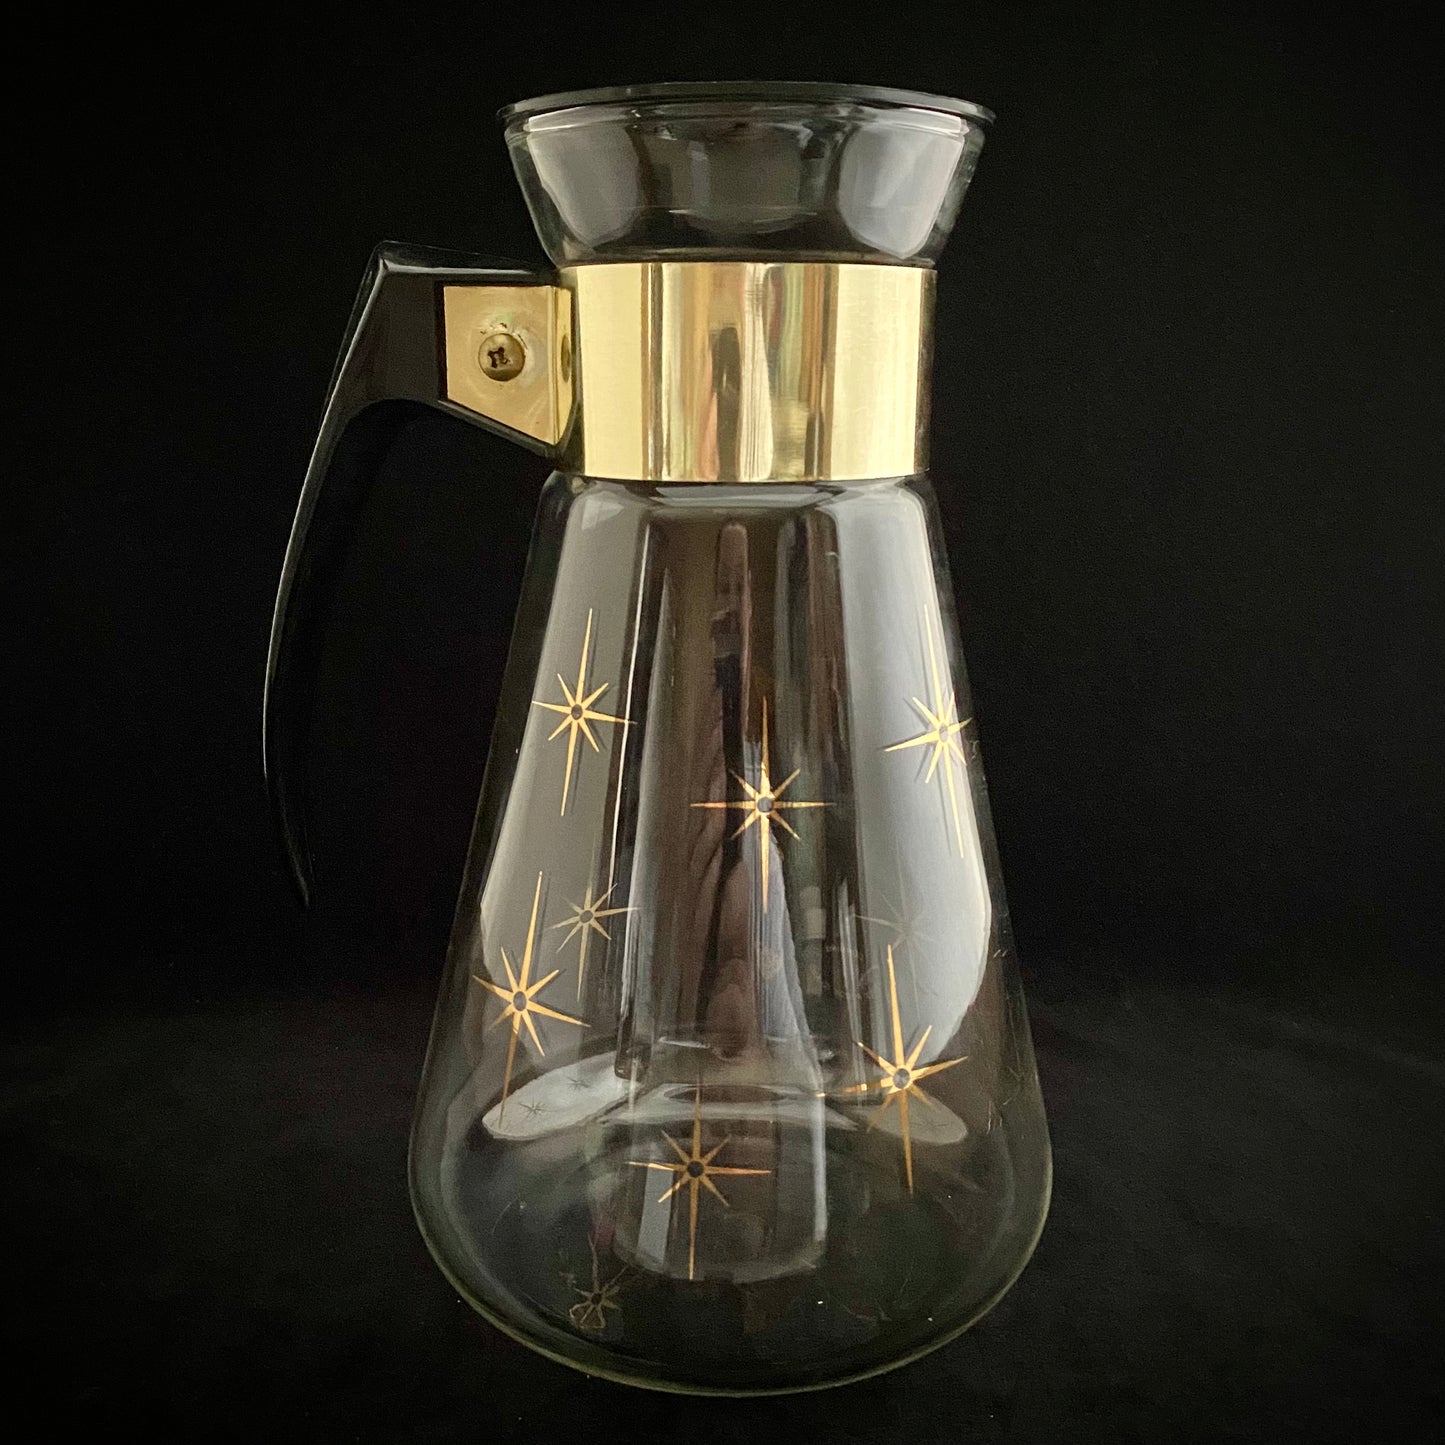 1950s Corning 6 Cup Coffee Carafe